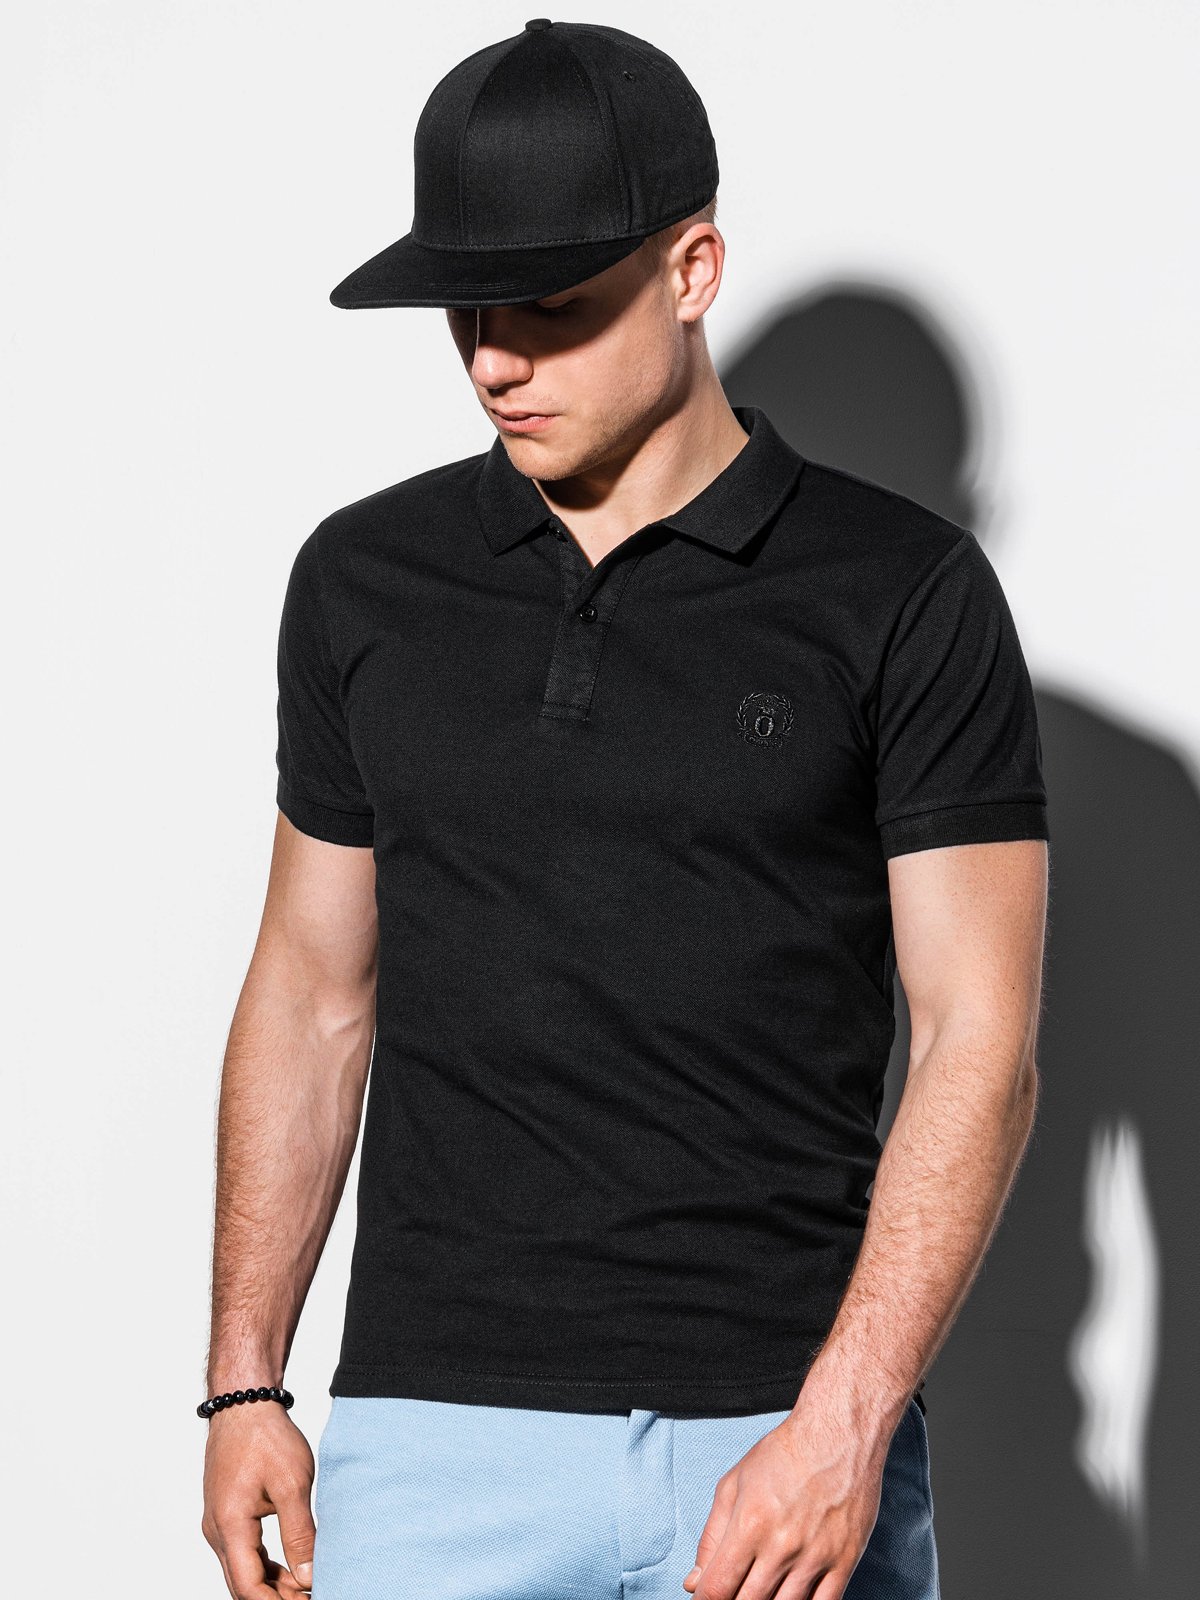 Men's plain polo shirt S1048 - black | MODONE wholesale - Clothing For Men